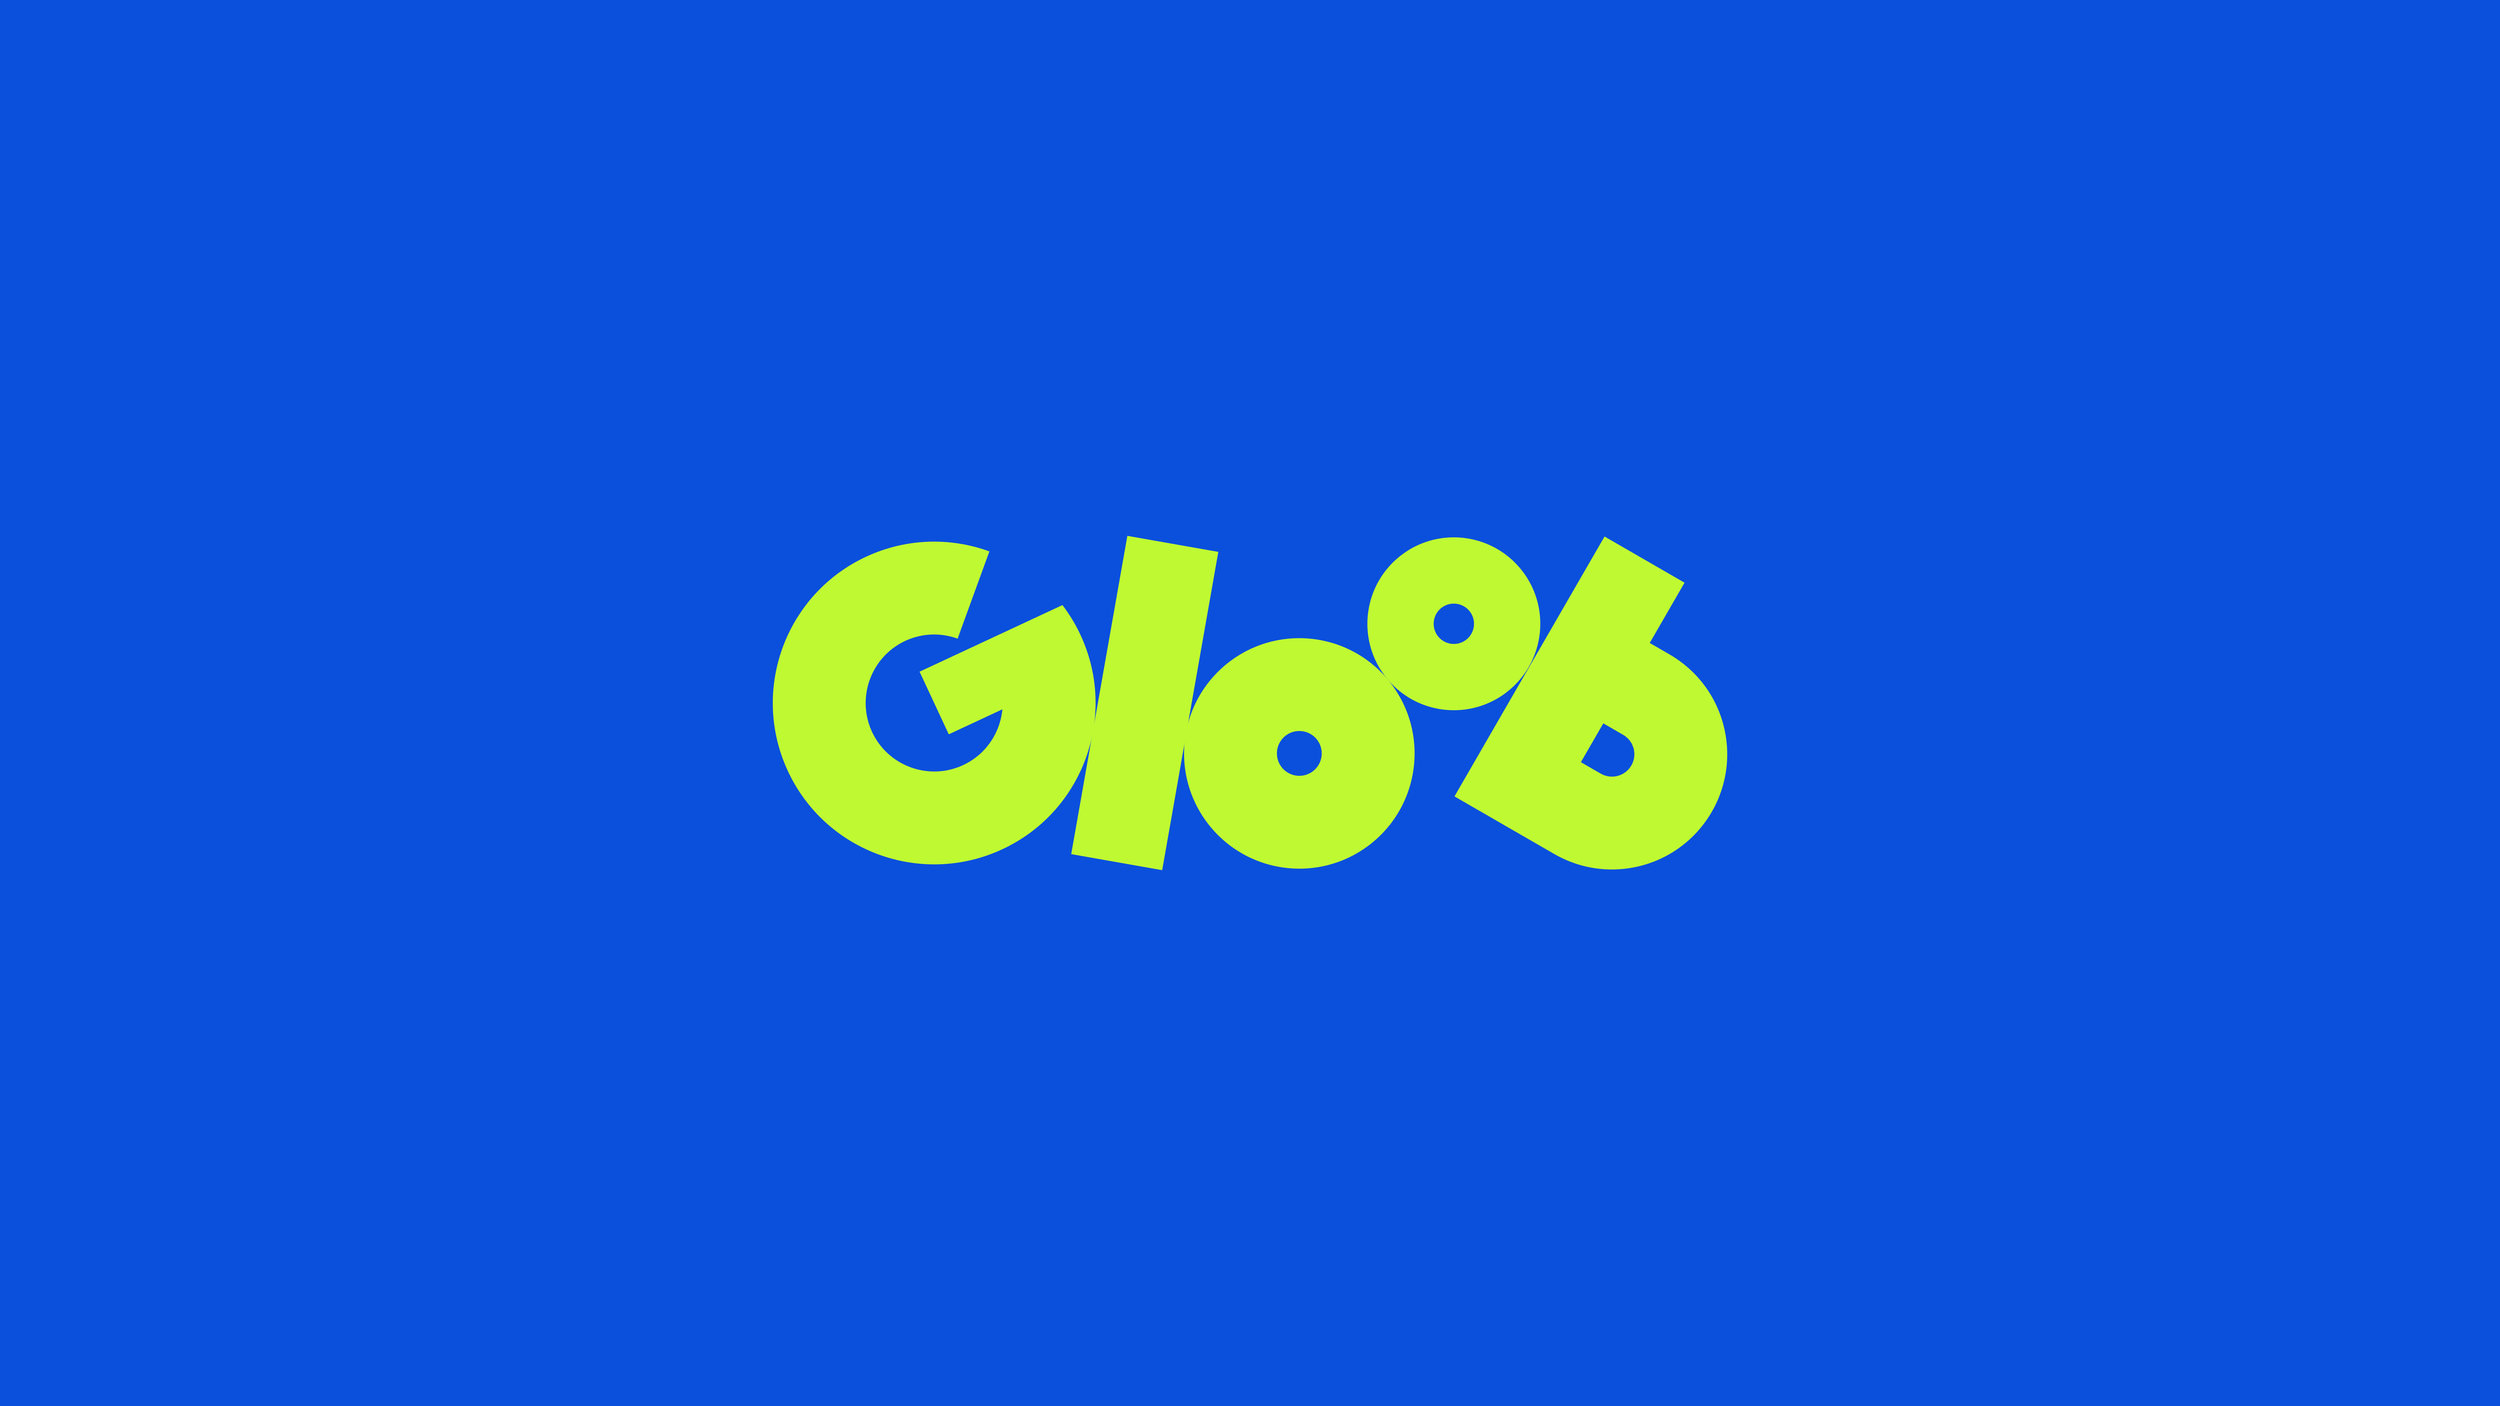 Gloob_001.jpg